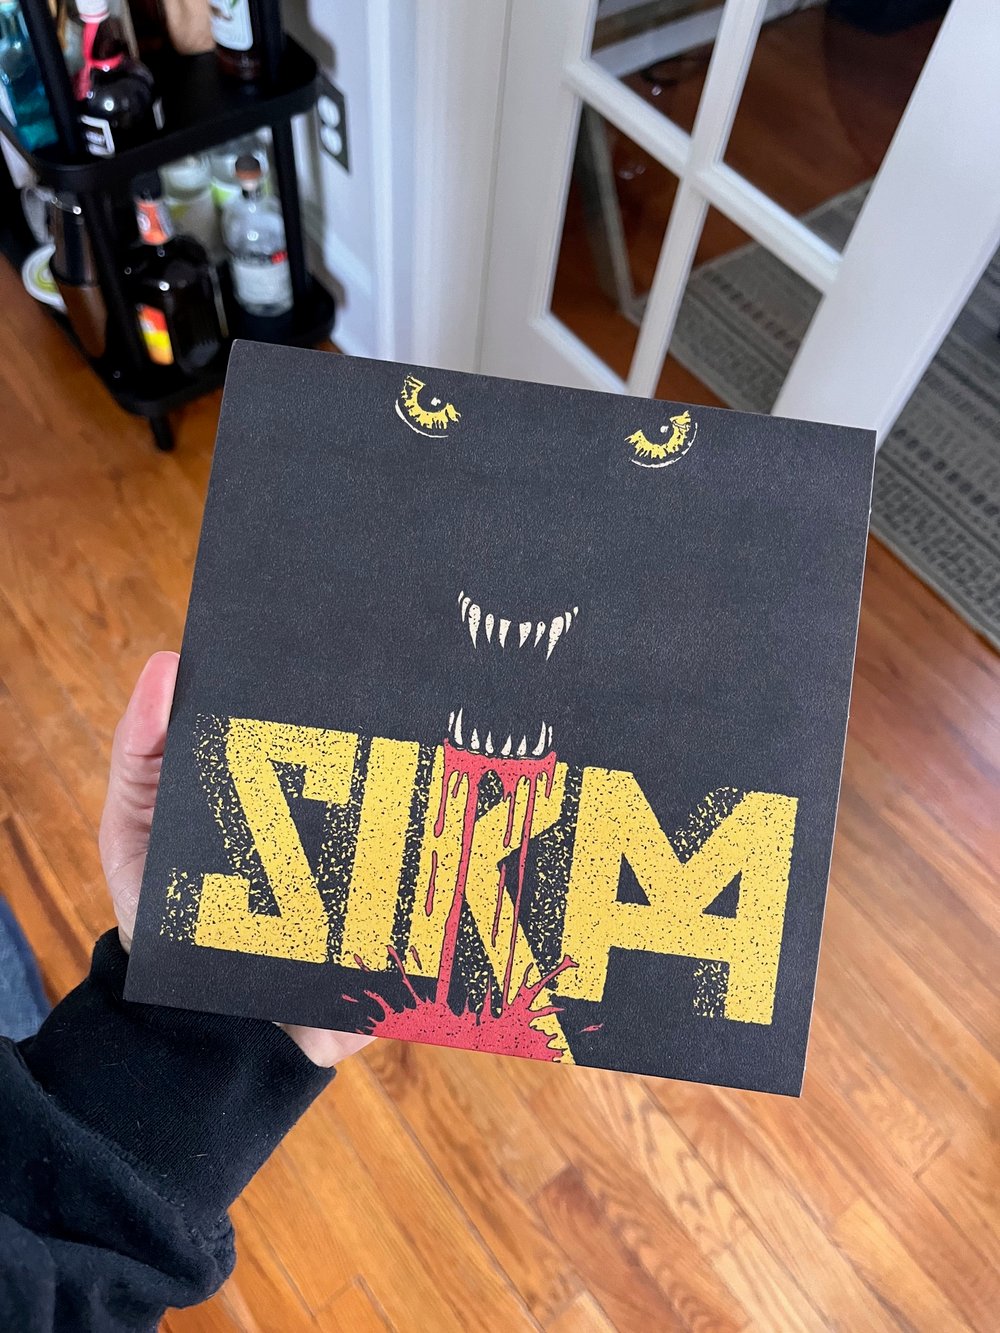 Sikm - “Demo” 7" 